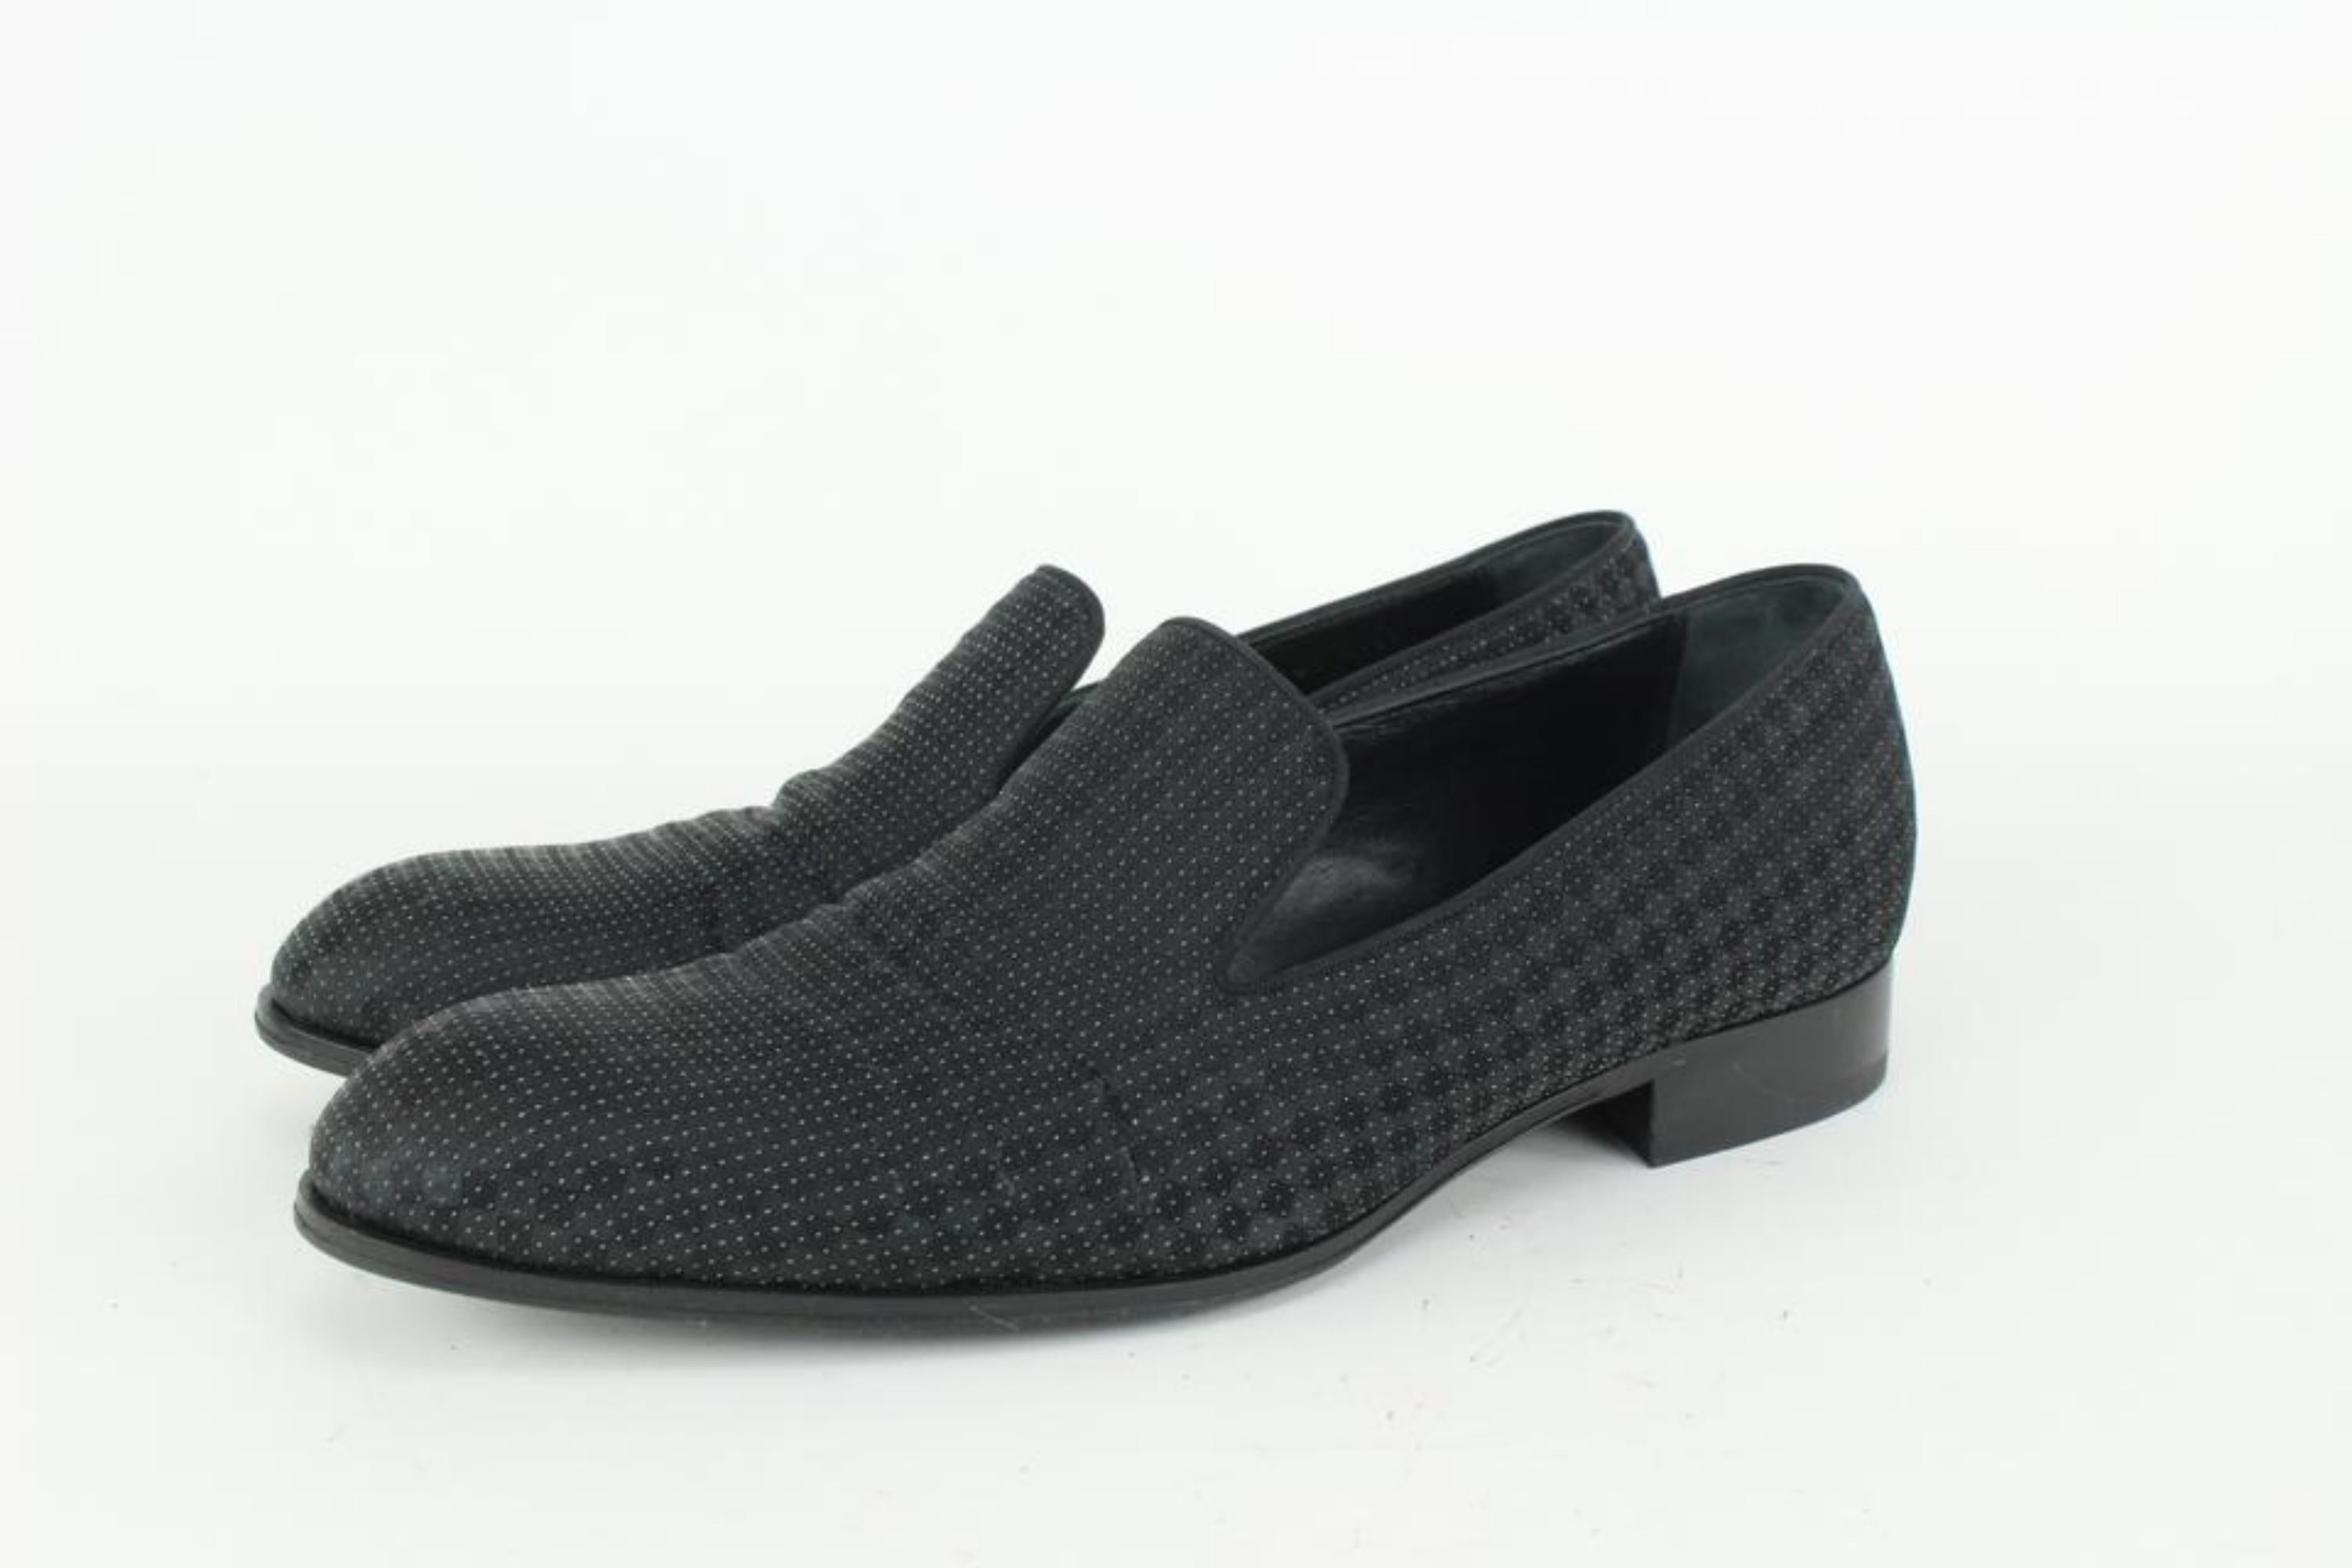 Louis Vuitton Mens US 9 Black Damier Sparkle Slip On Loafer Dress Shoe 1LV3L17
Date Code/Serial Number: MT 0127
Made In: Italy
Measurements: Length:  11.5